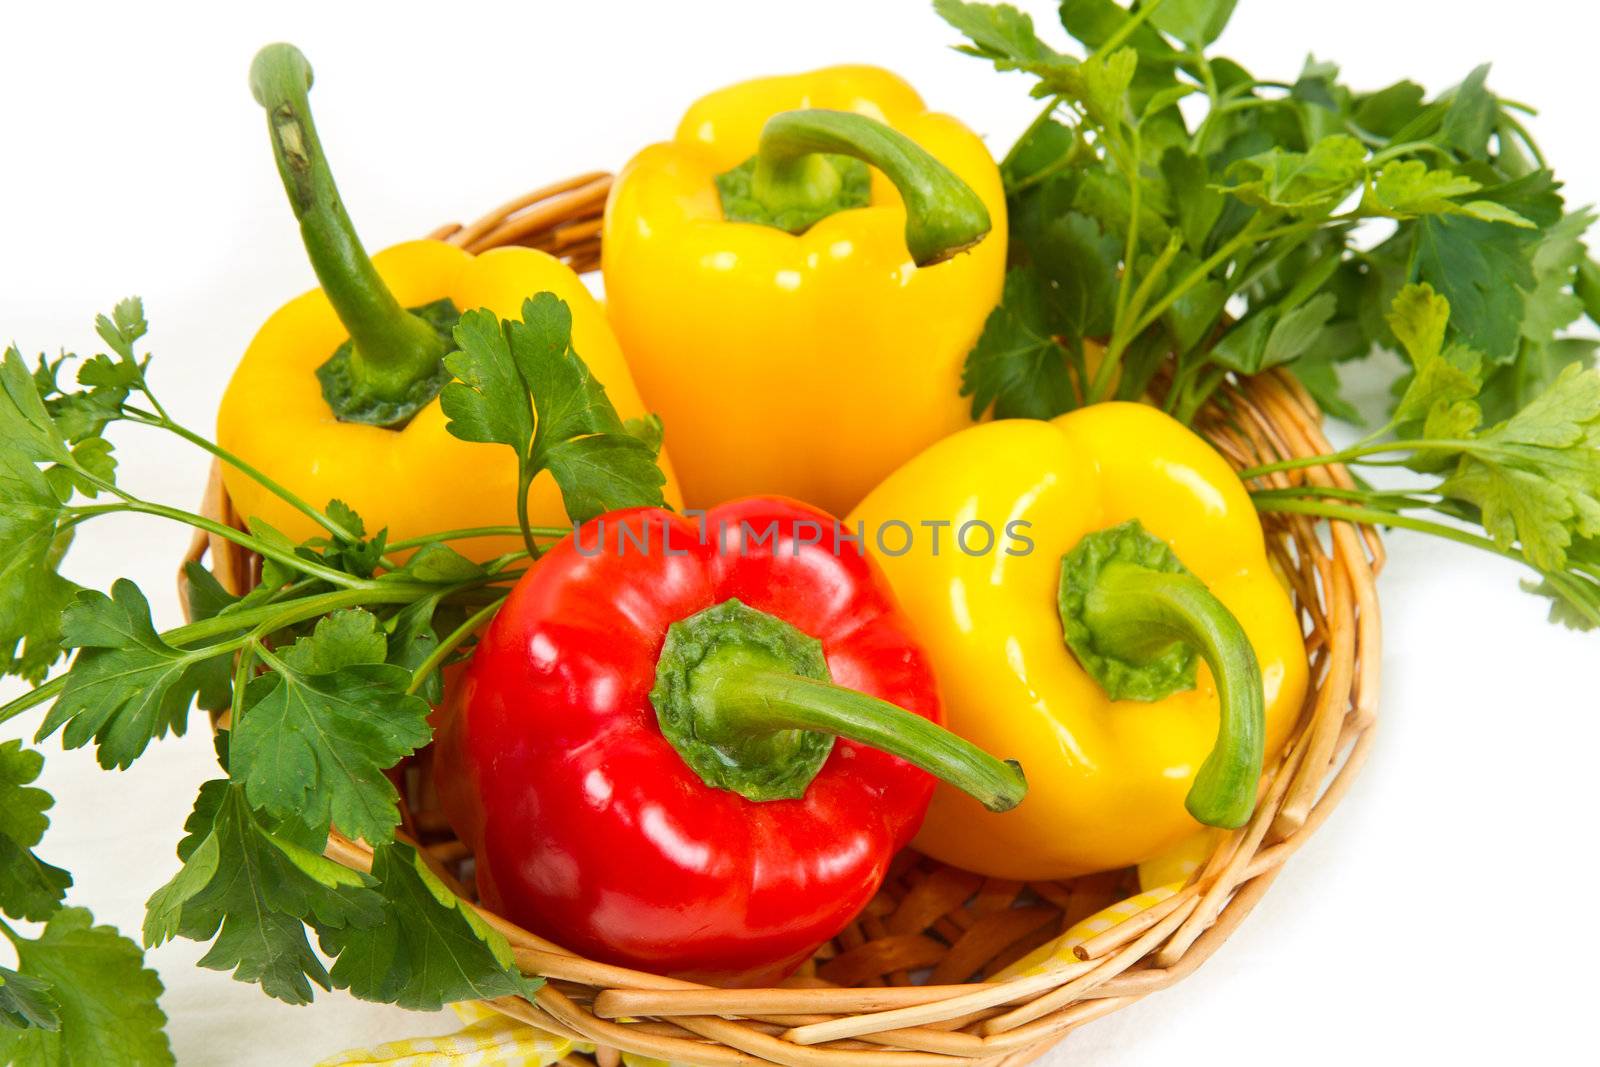 pepper in basket on white background 